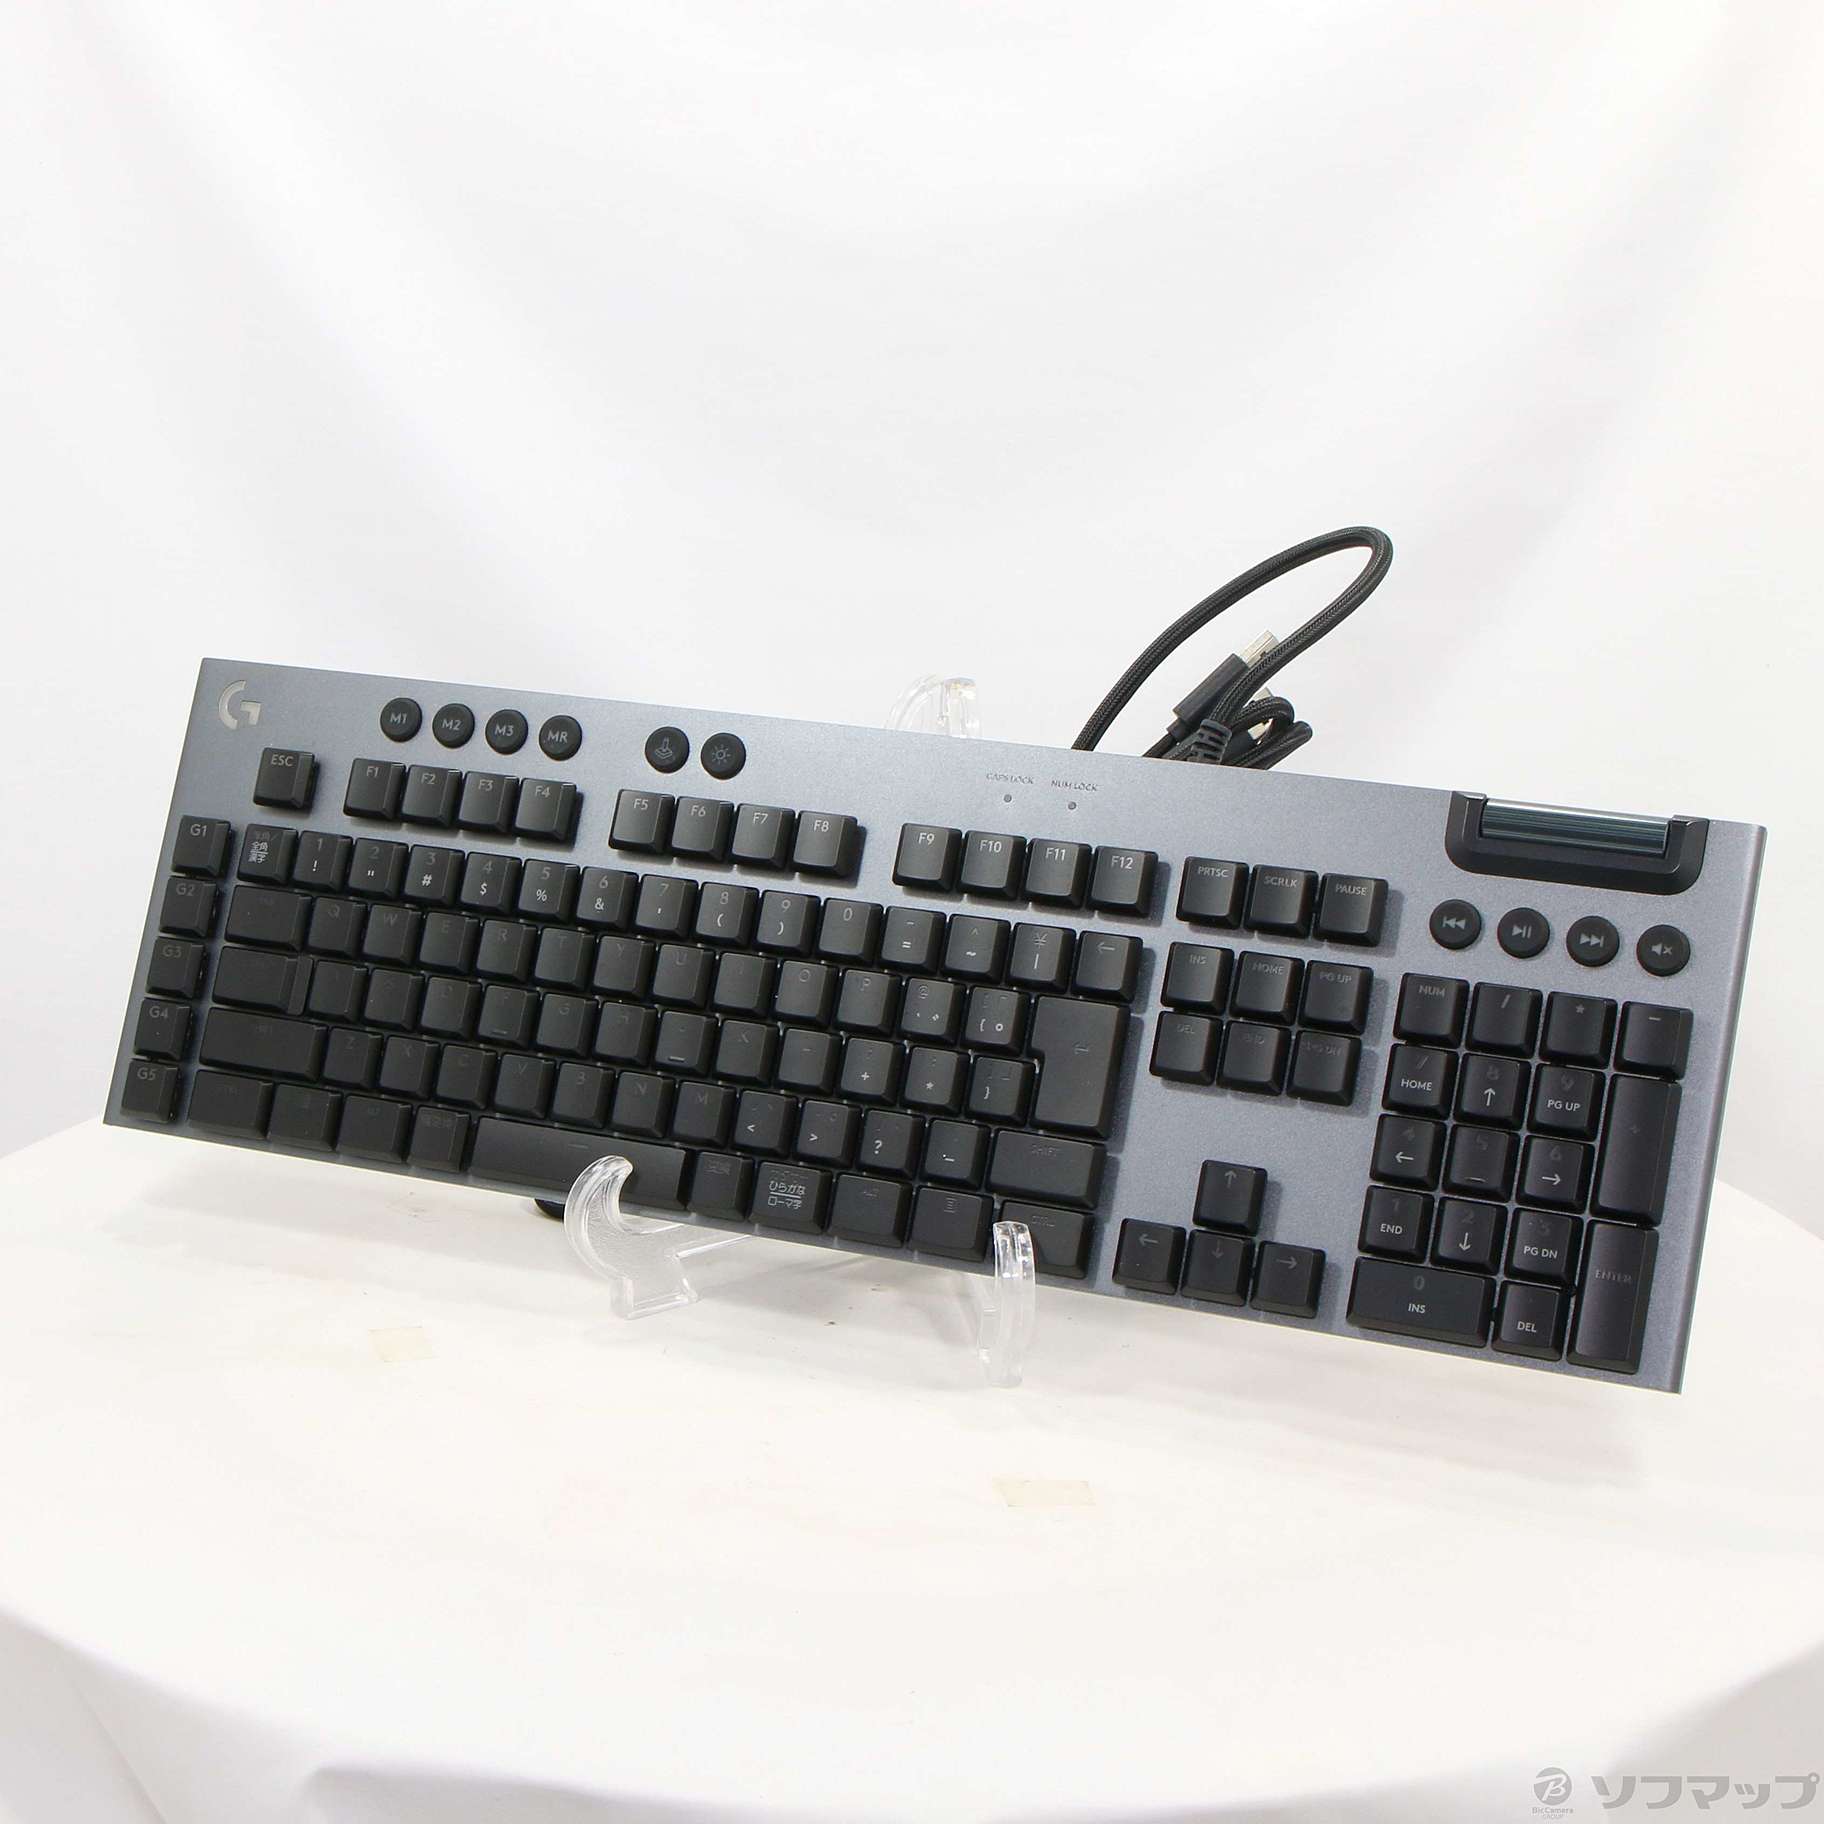 中古】G813 LIGHTSYNC RGB Mechanical Keyboard Linear G813-LN